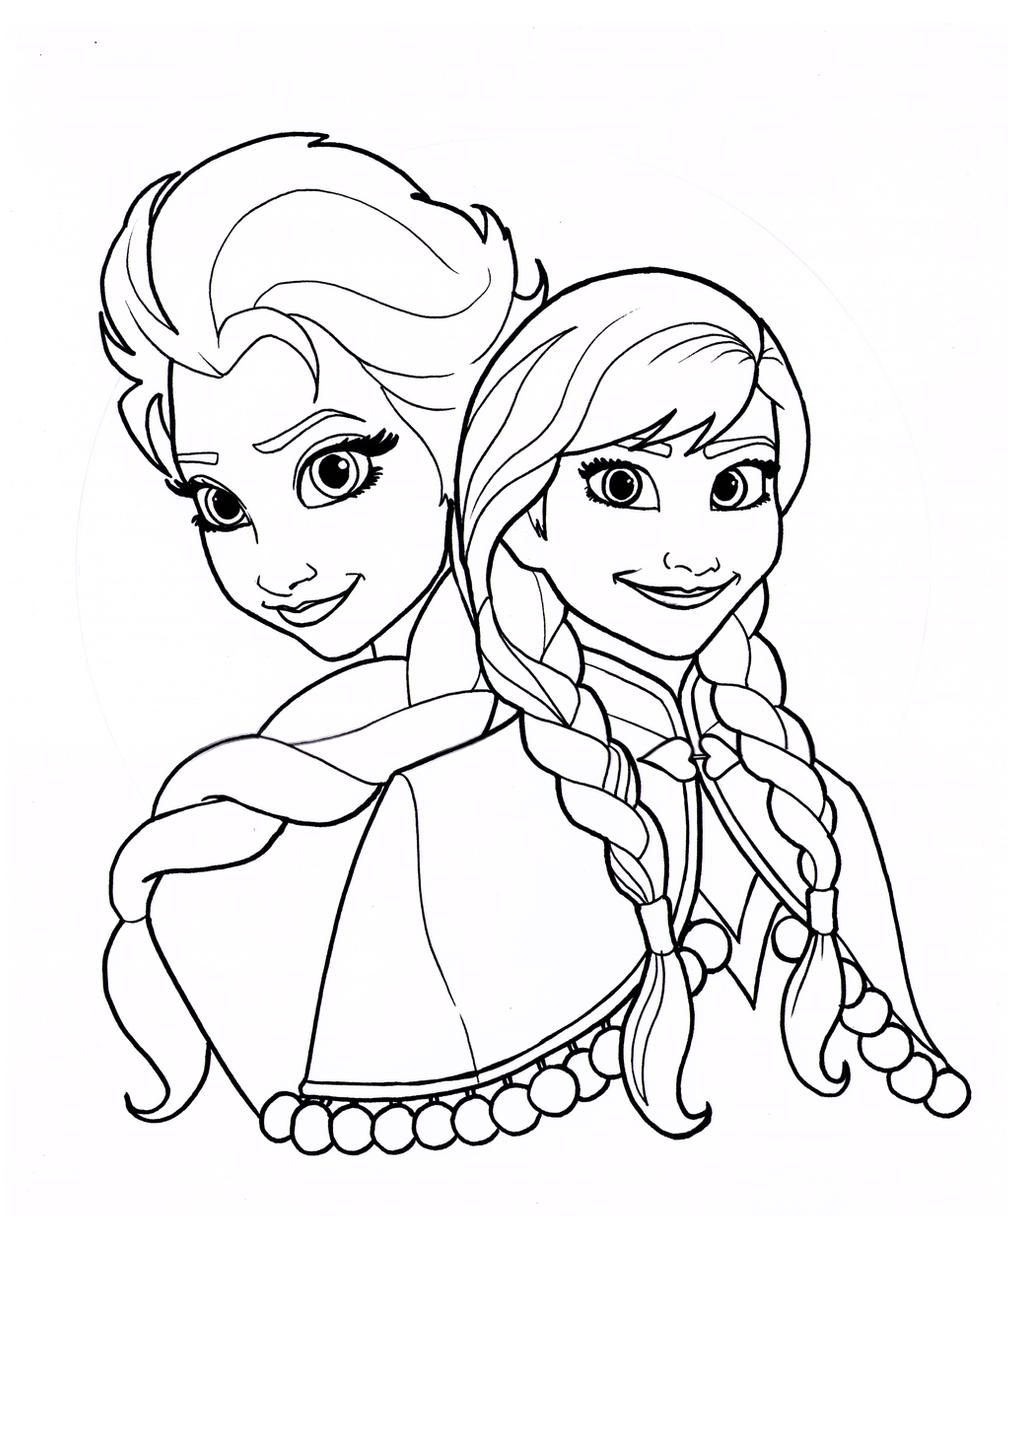 Anna And Elsa Line Art by Janine-Douglas on DeviantArt